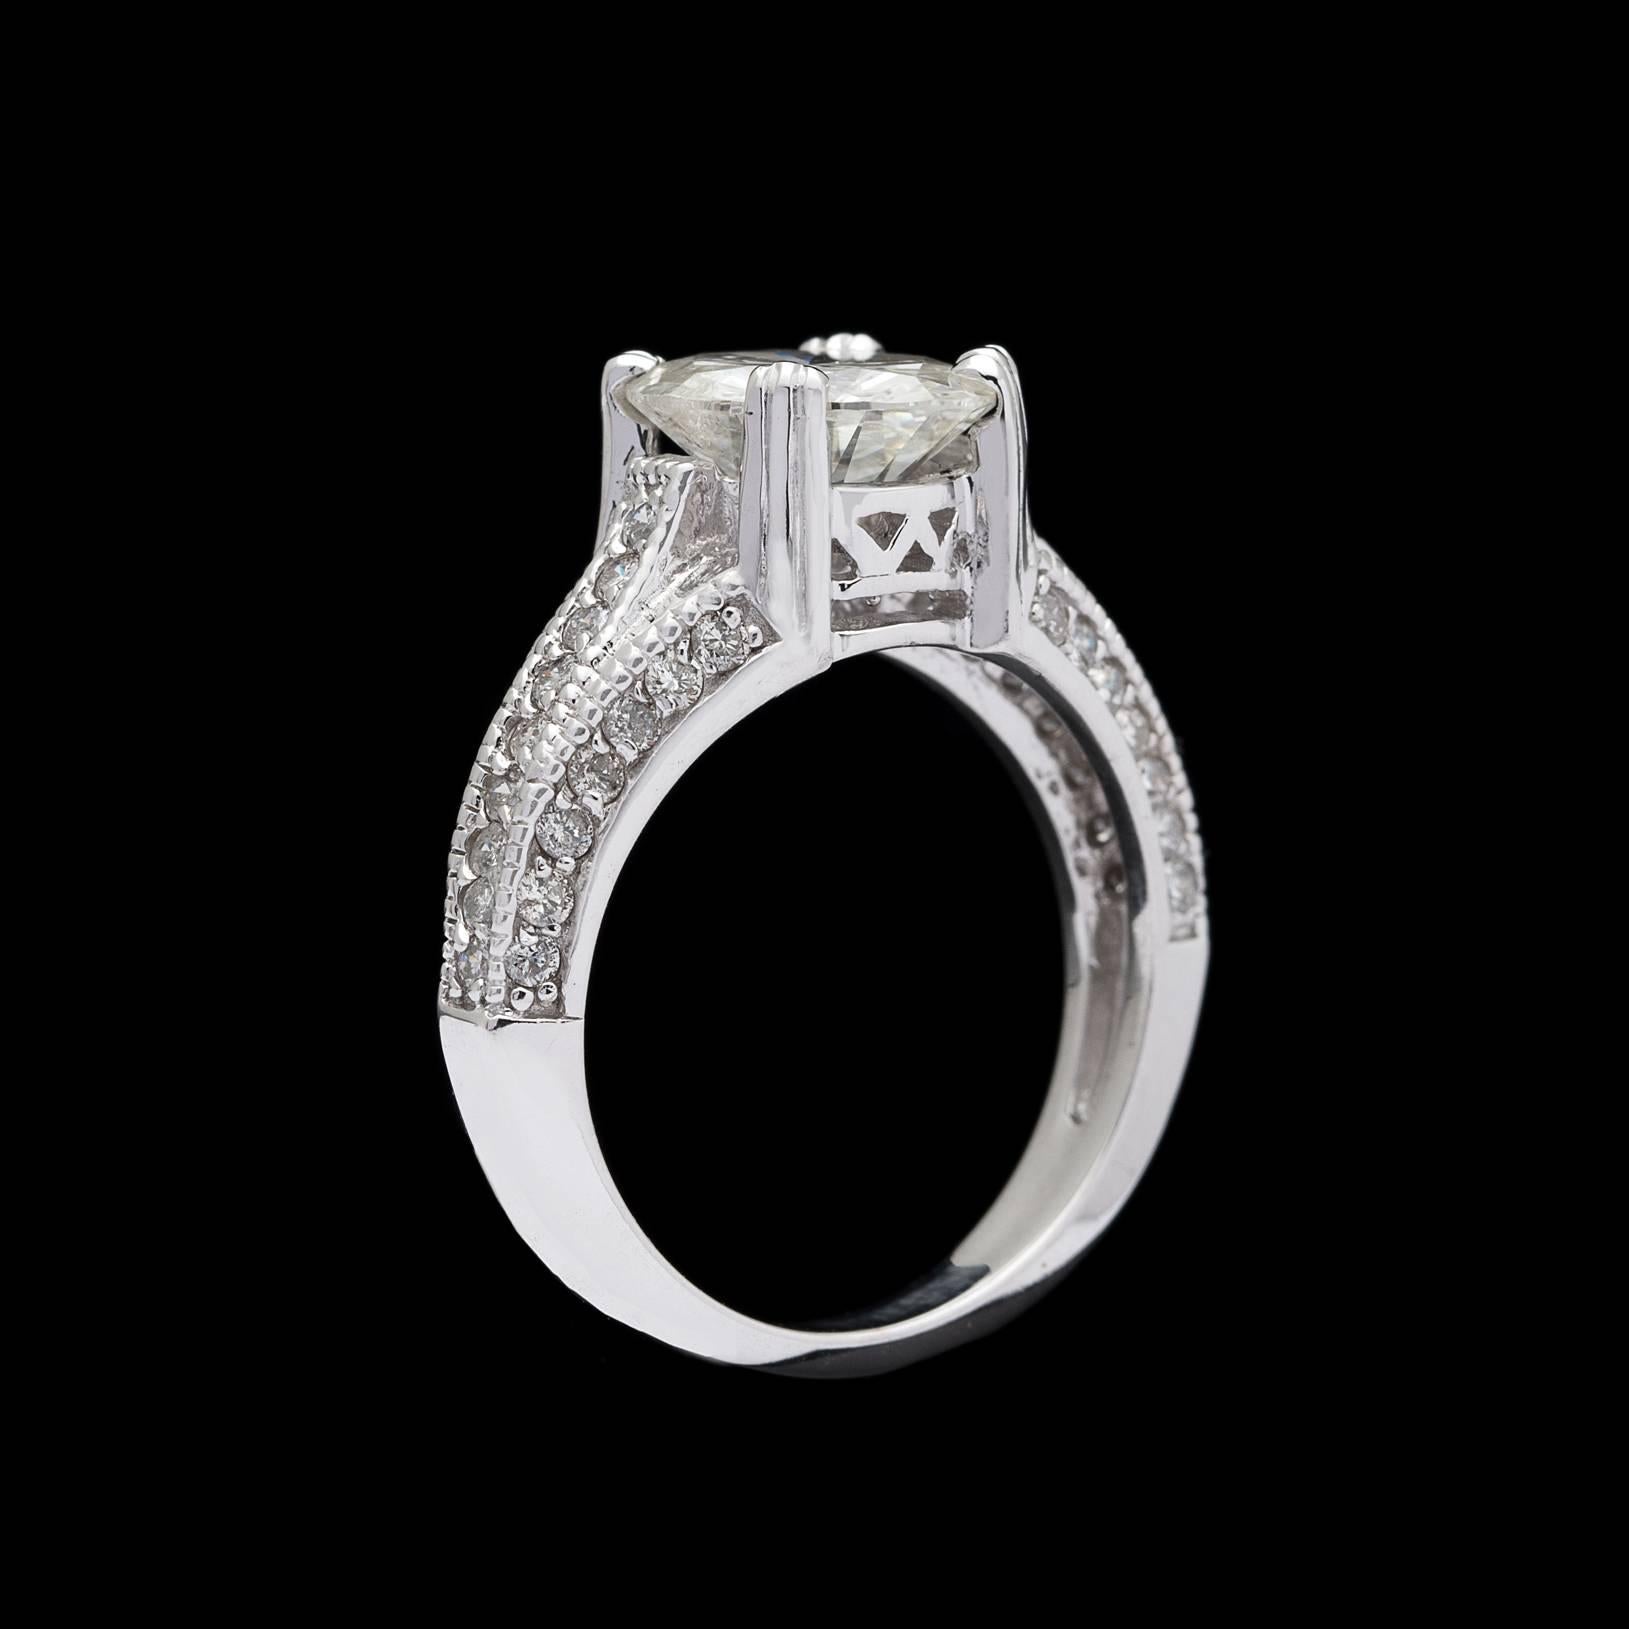 Round Cut Estate Diamond Ring Featuring Impressive 2.39 Carat Round Diamond